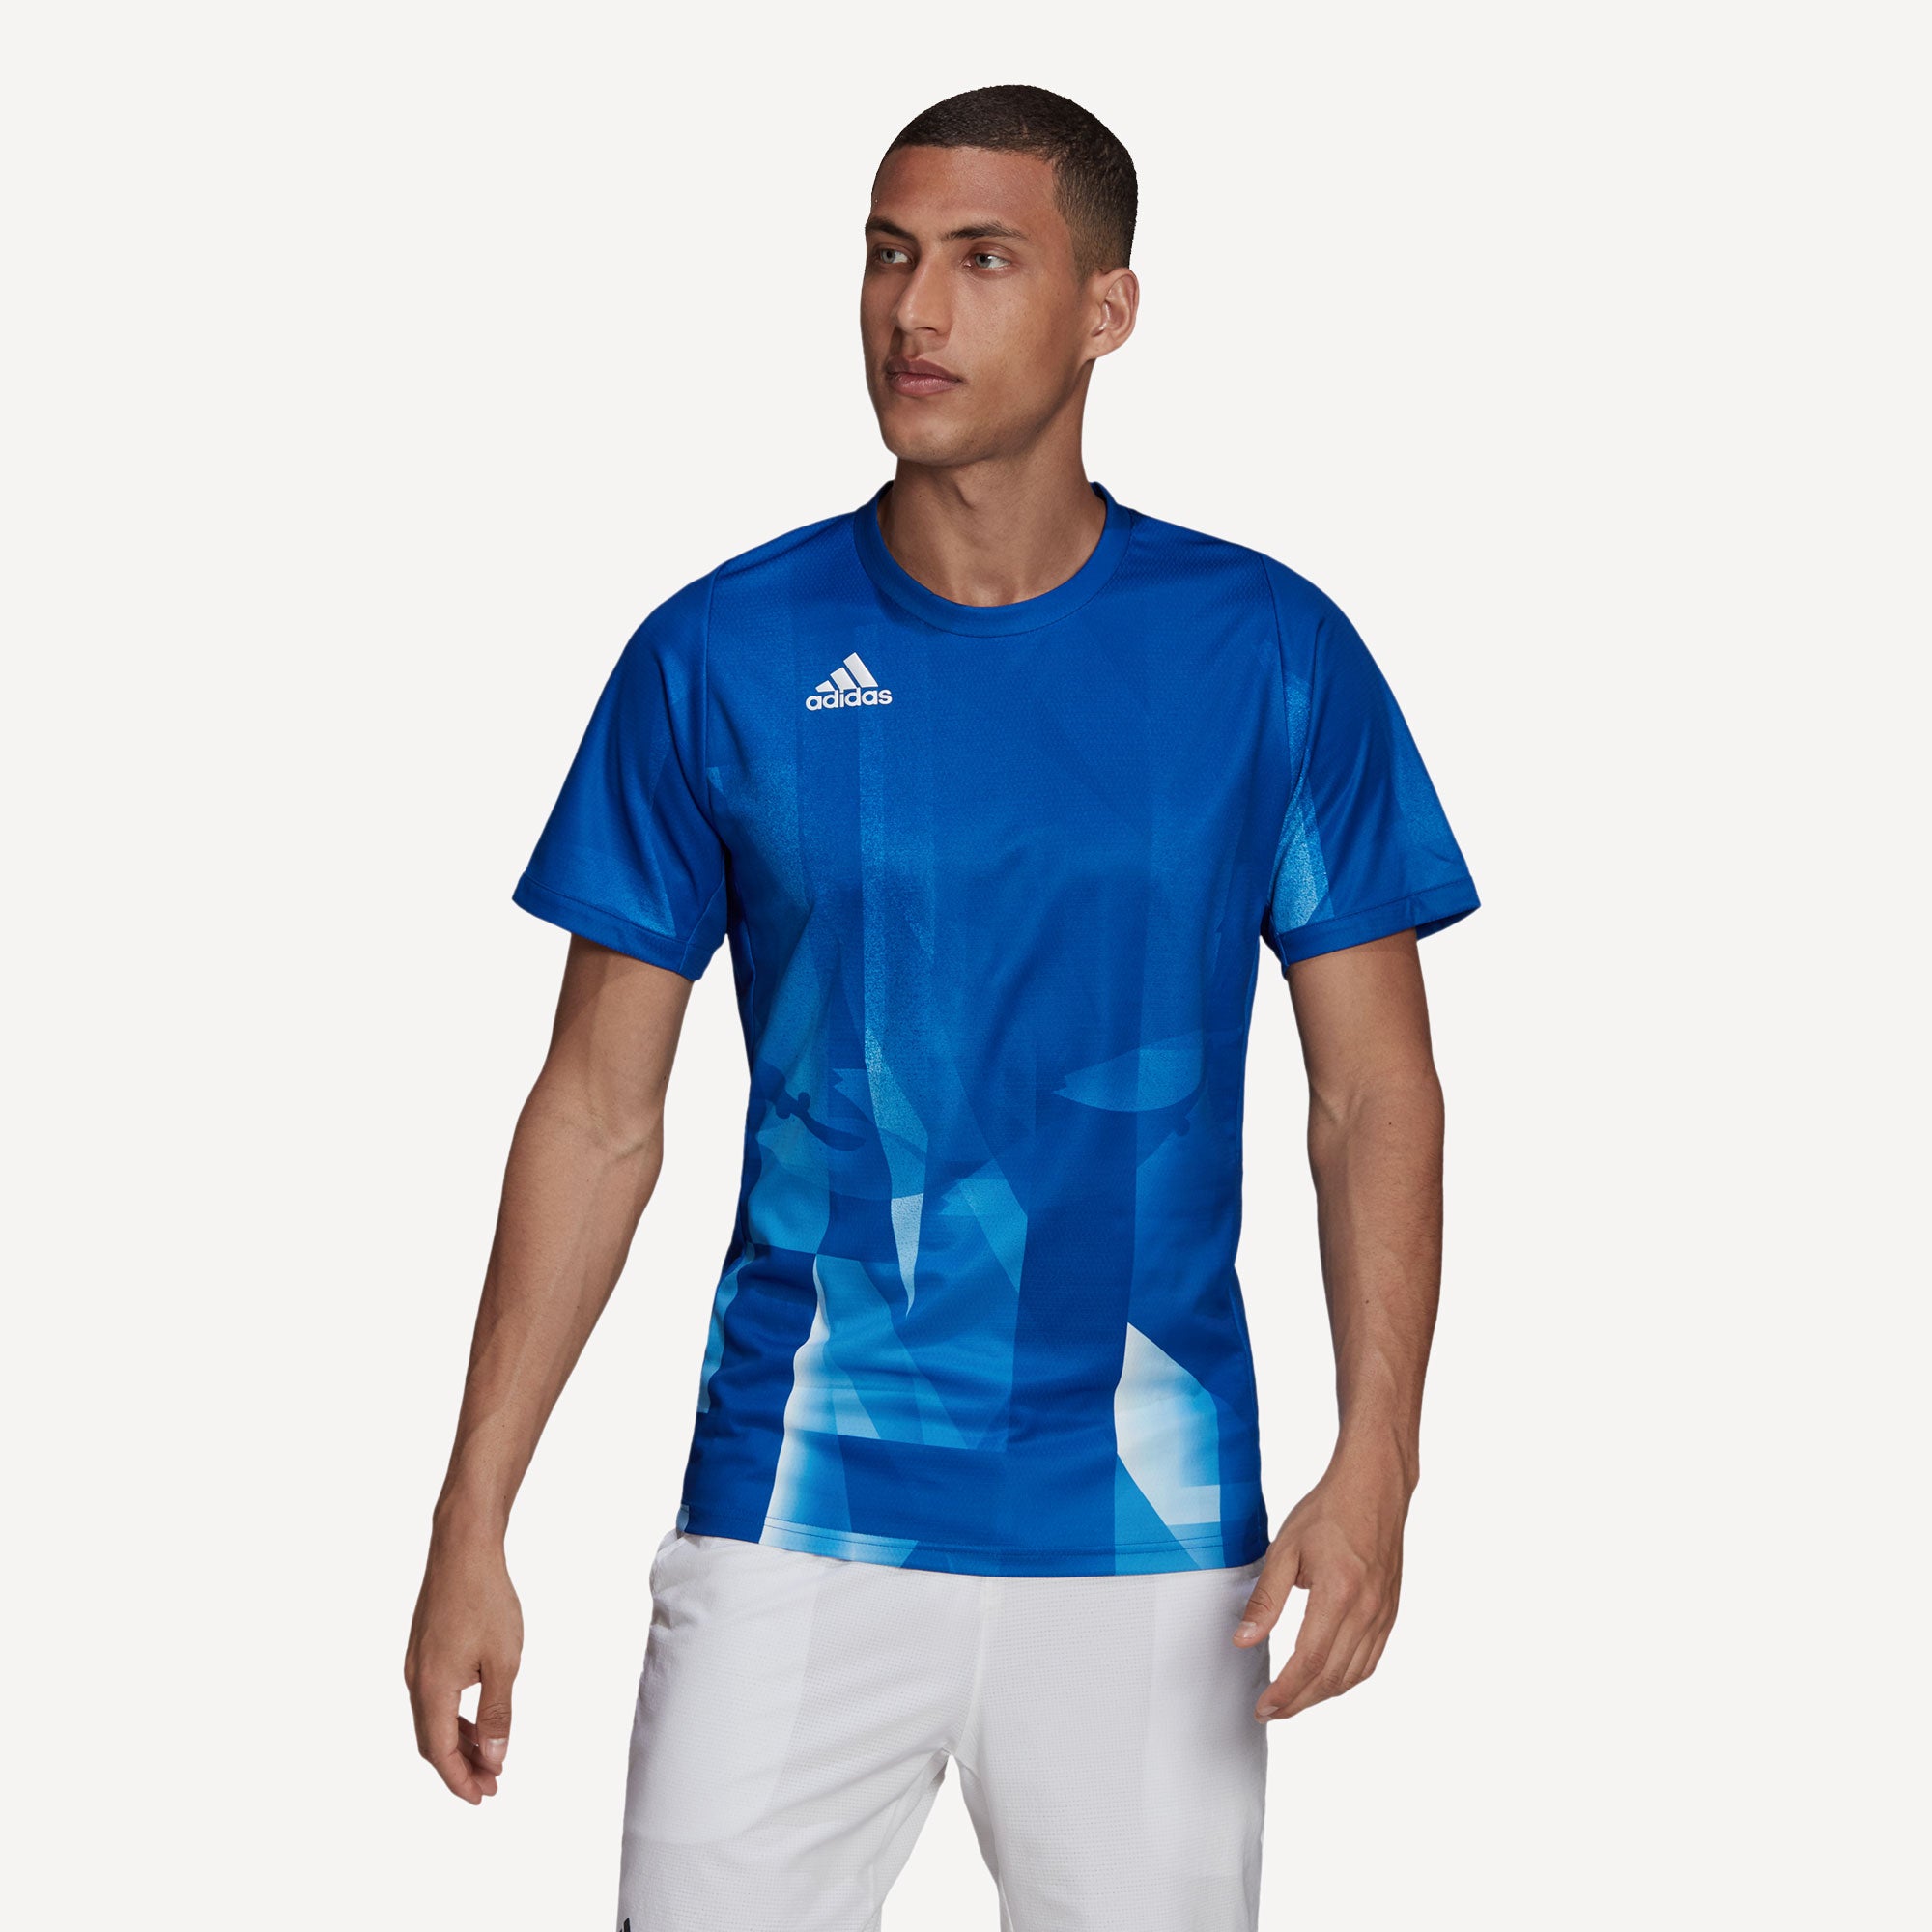 adidas Freelift Tokyo Primeblue Heat Ready Men's Tennis Shirt Blue(1)